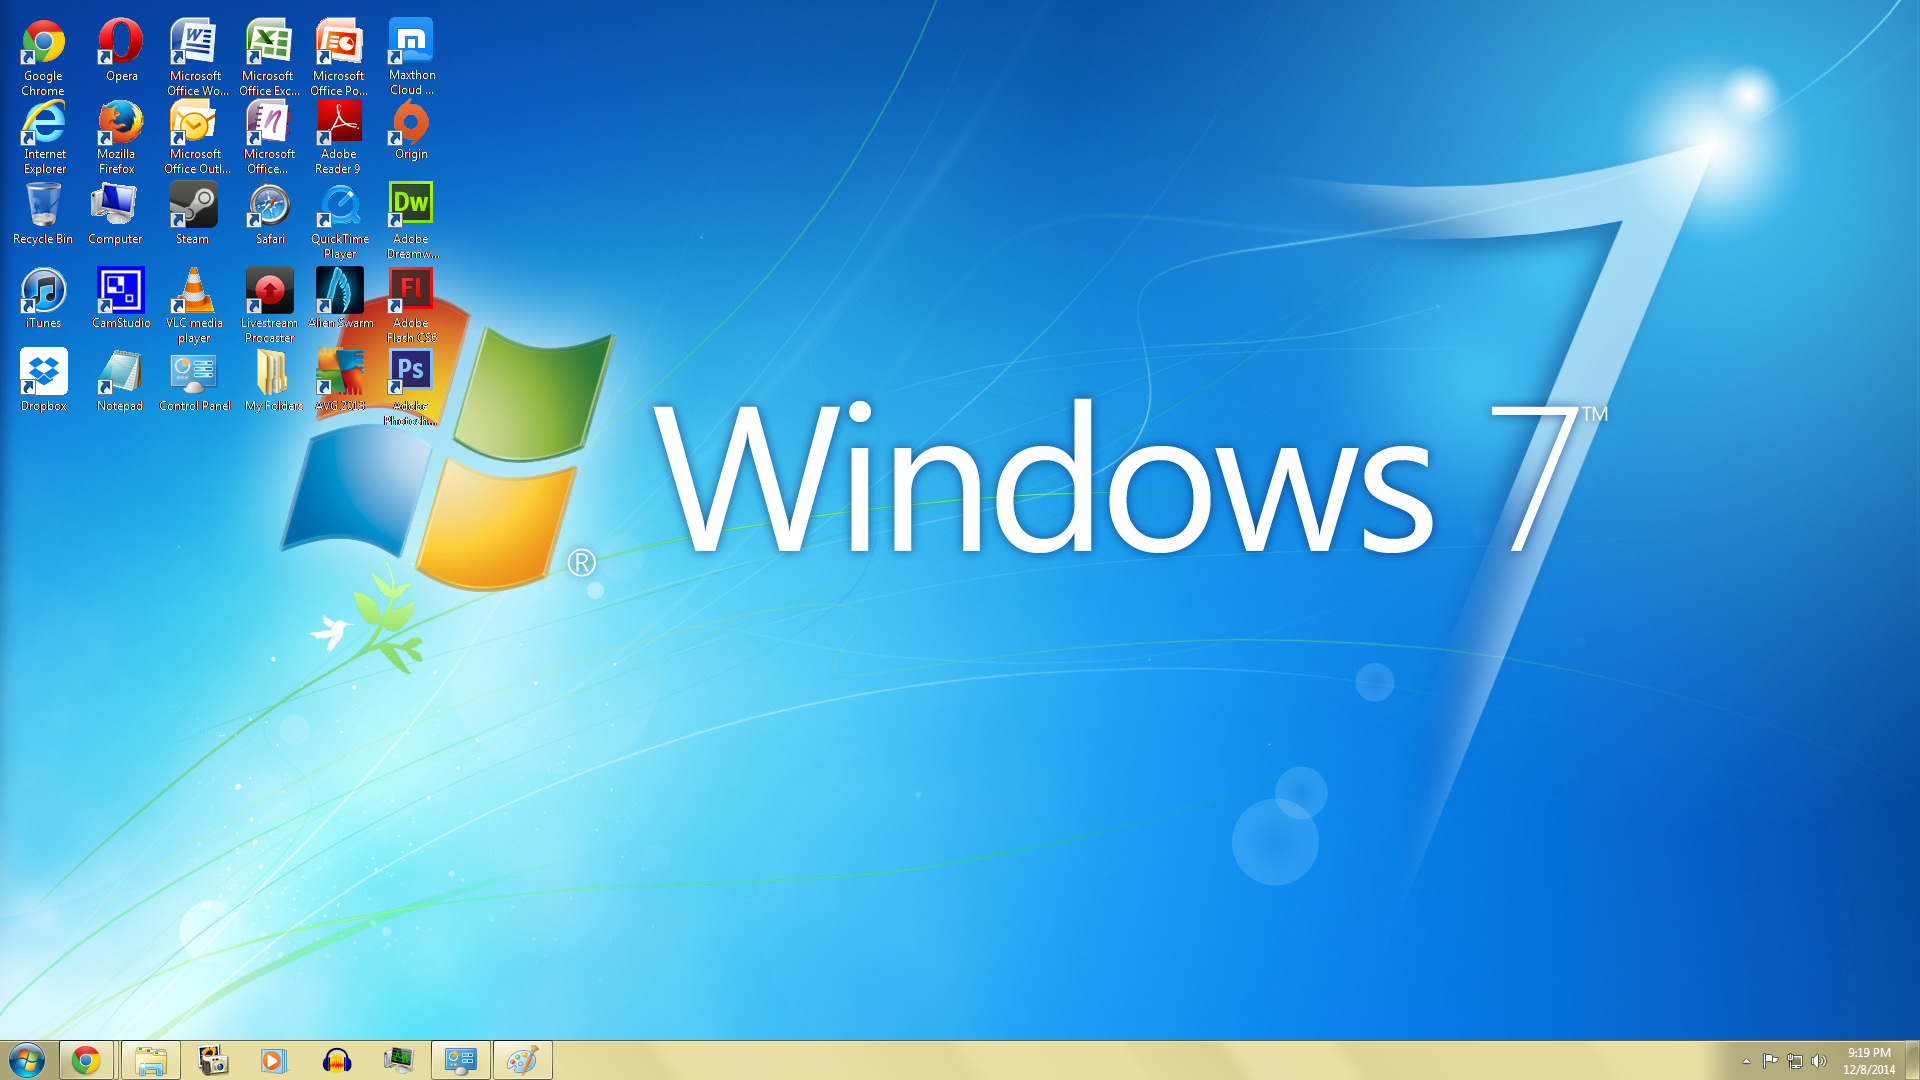 Модель windows 7. Виндовс 7. Windows 7 рабочий стол. Windows 7 Скриншоты. Windows 7 Интерфейс.